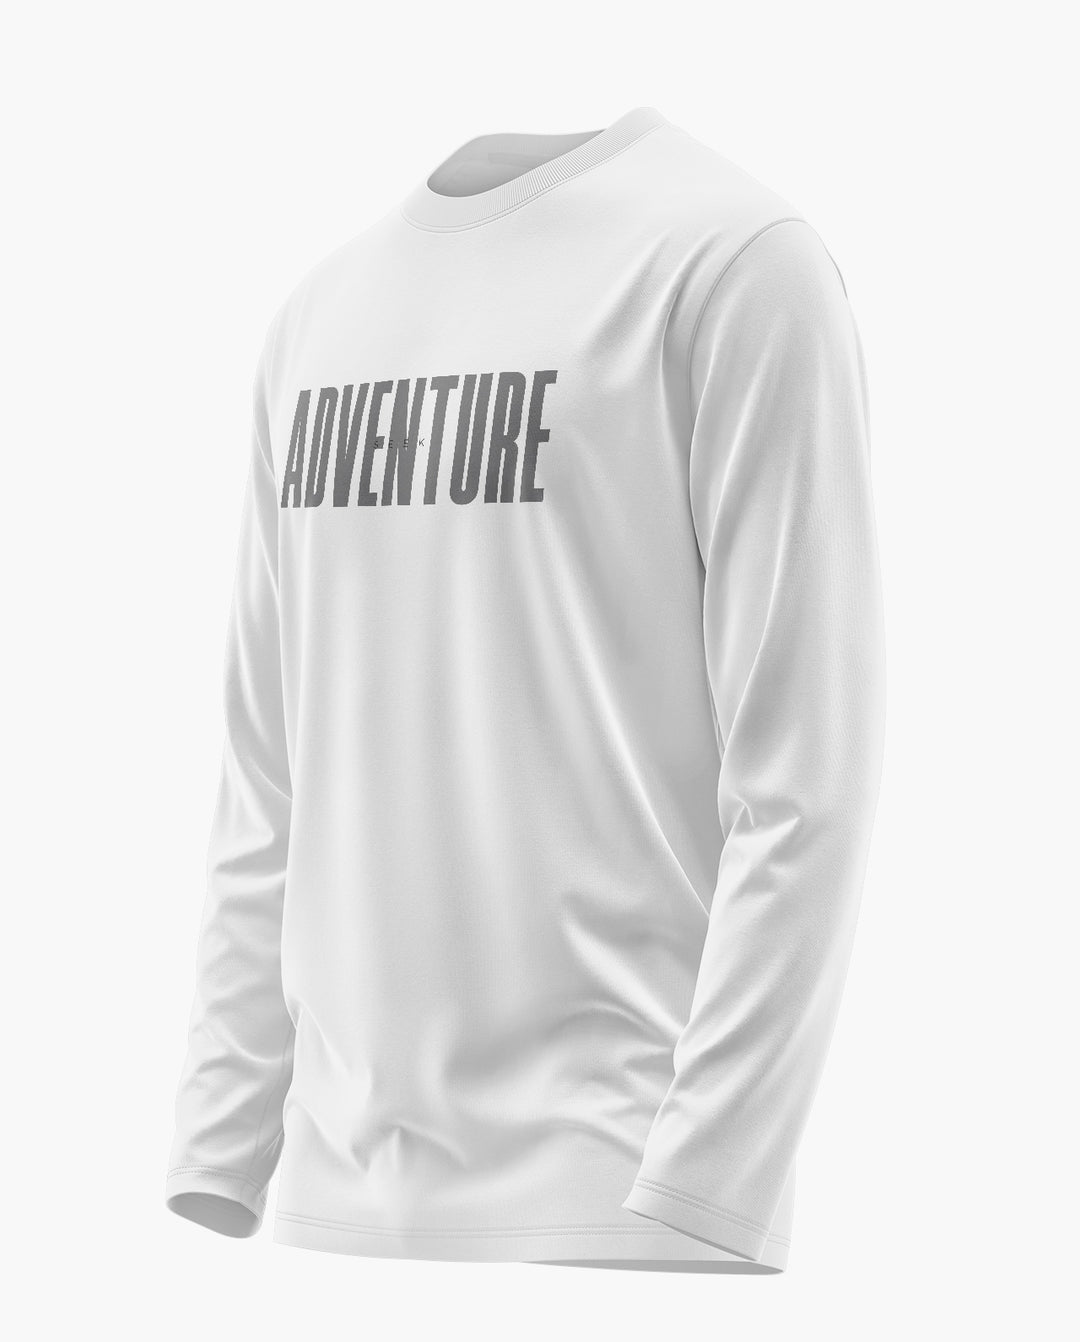 SEEK ADVENTURE Full Sleeve T-Shirt